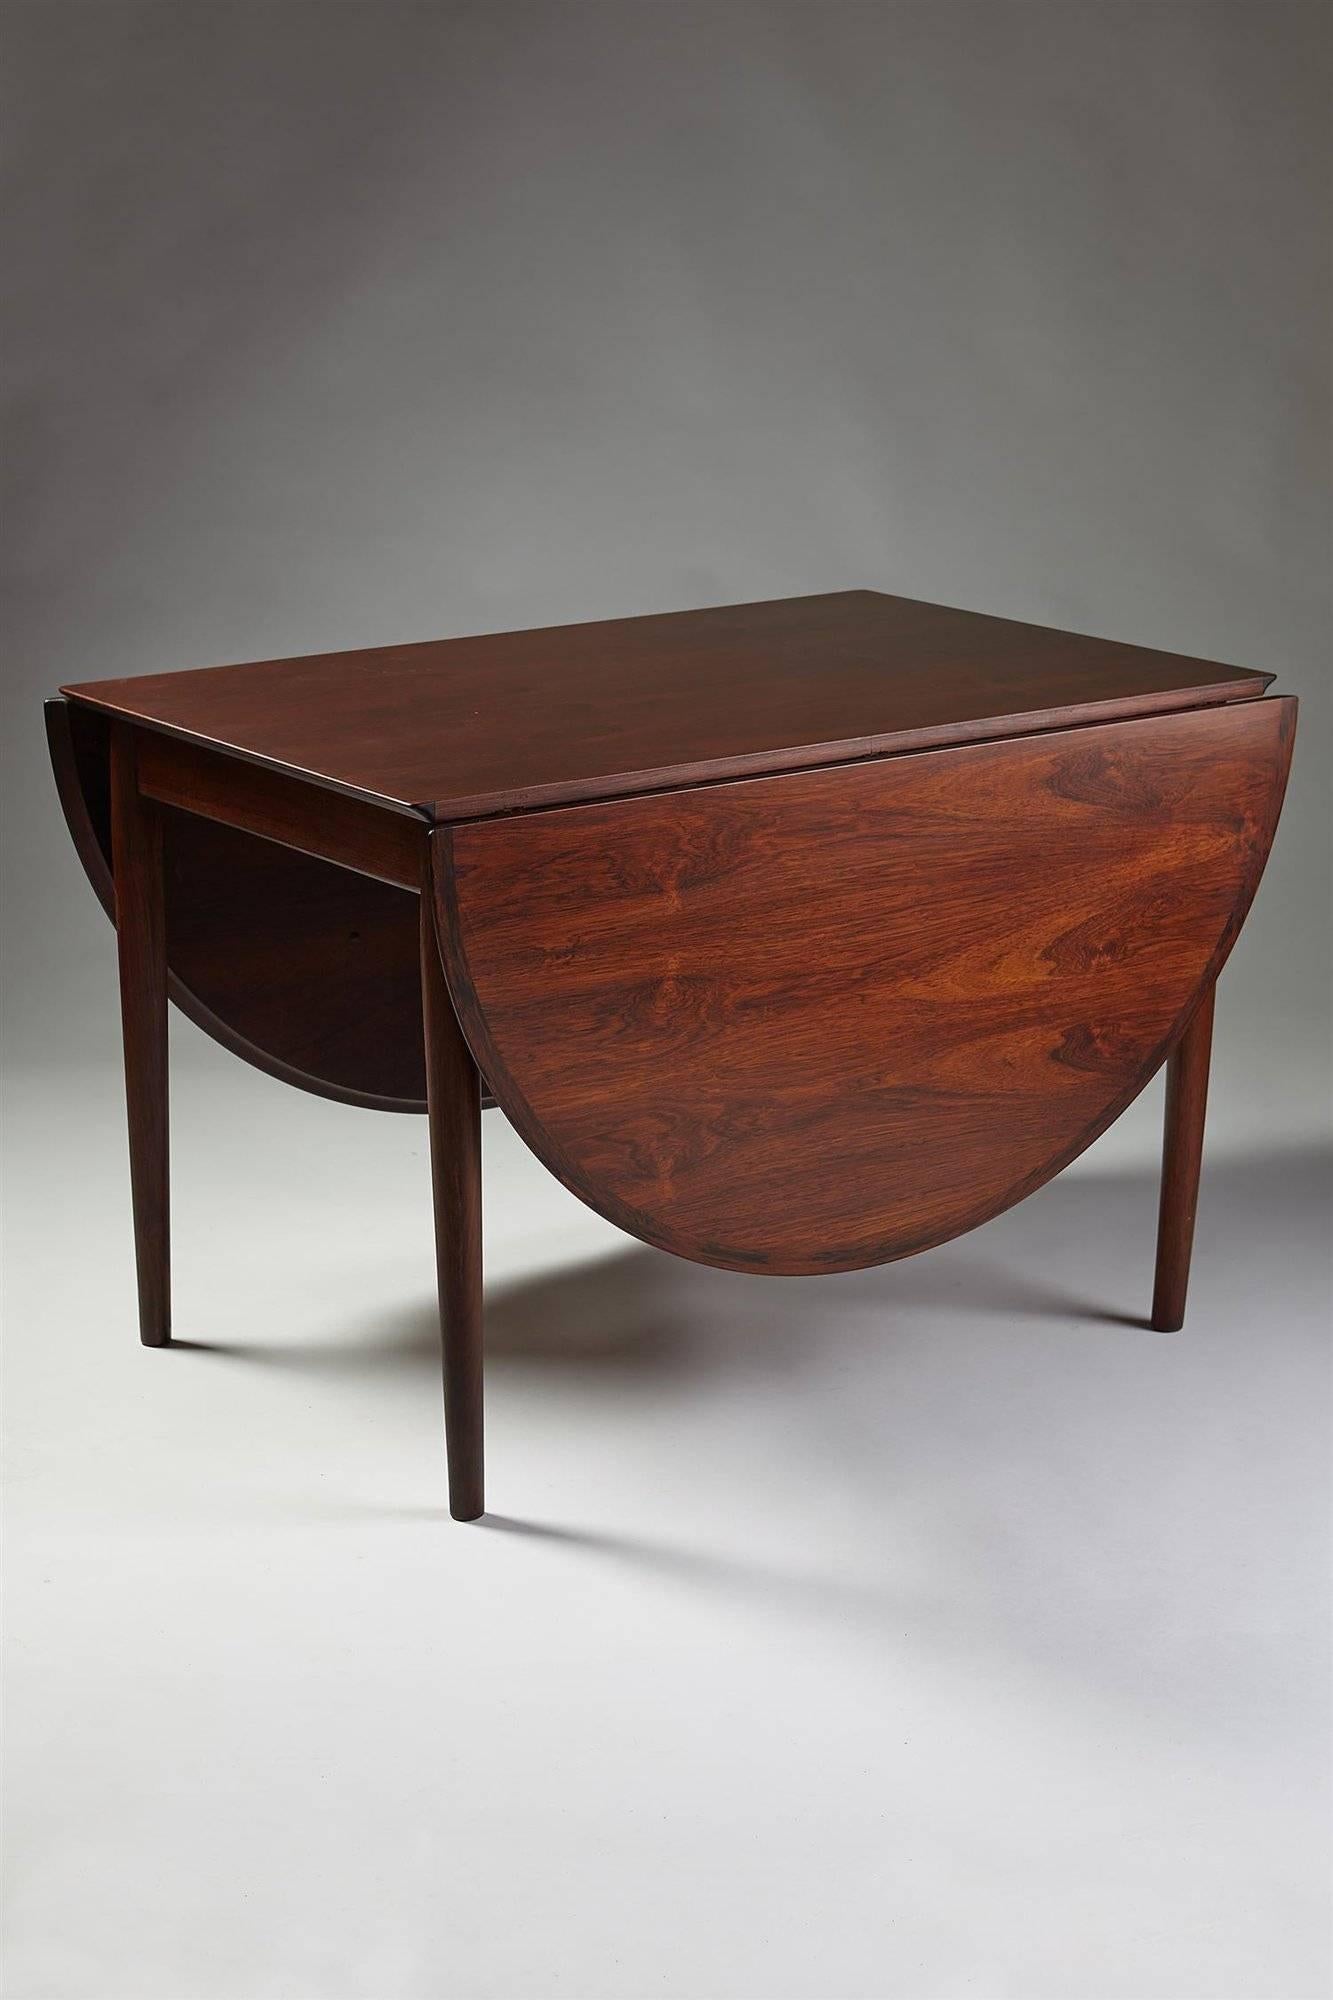 Dining table designed by Arne Vodder for Sibast, Denmark, 1958

Rosewood.